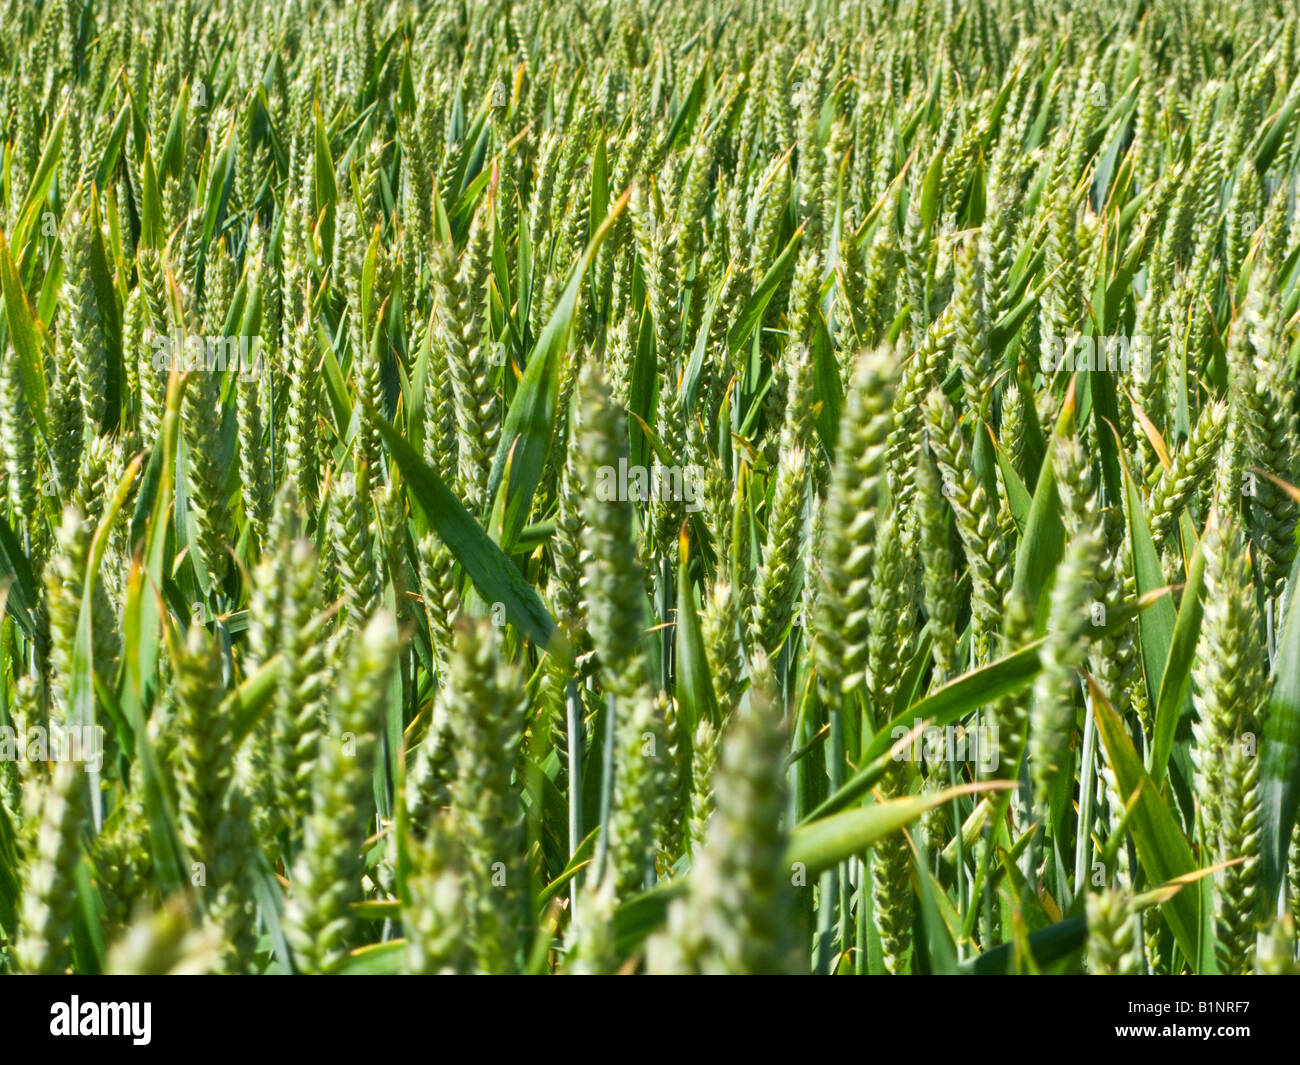 Young unripe Wheat close up UK Stock Photo - Alamy